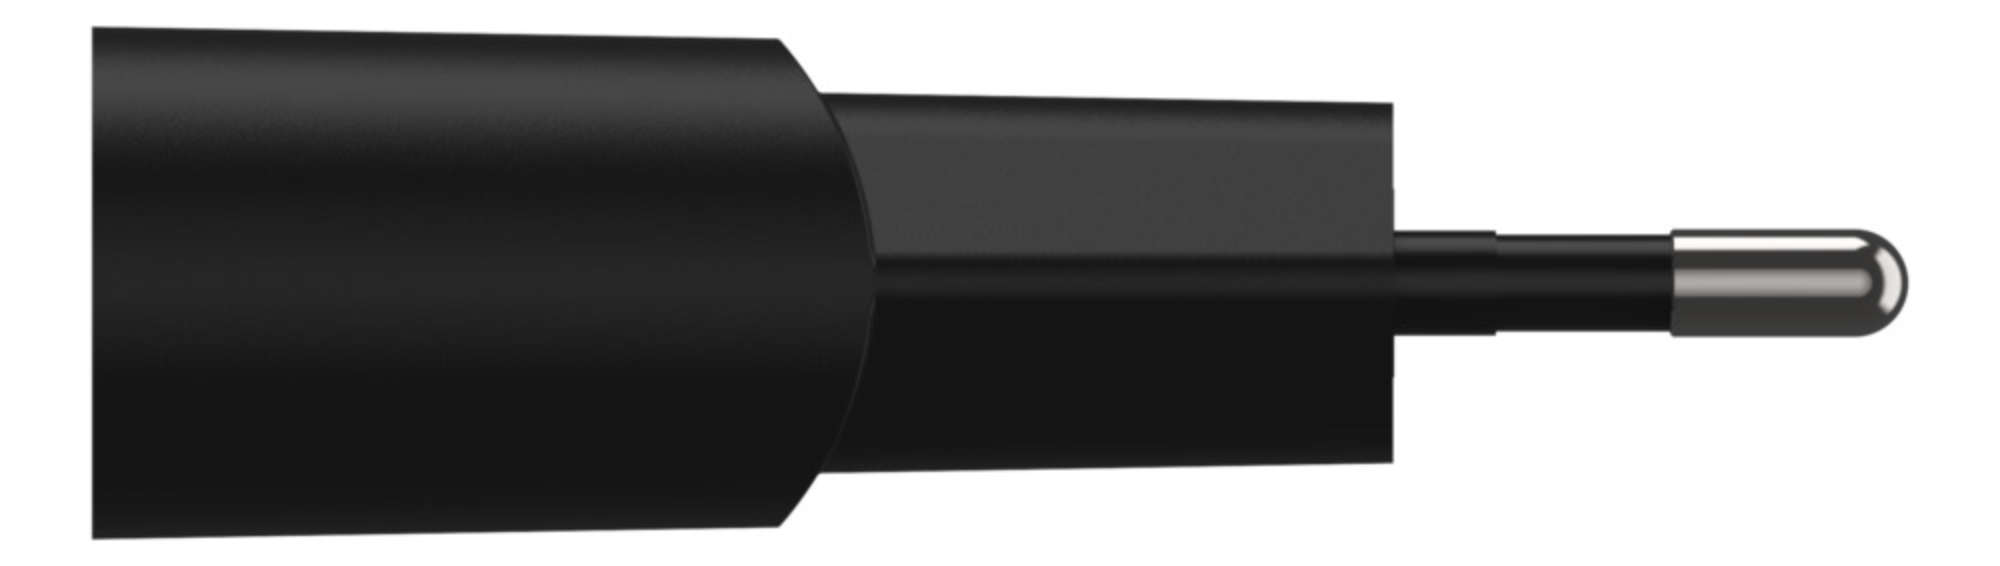 Ansmann Home Charger HC105 1xUSB 1000mA USB Ladegerät